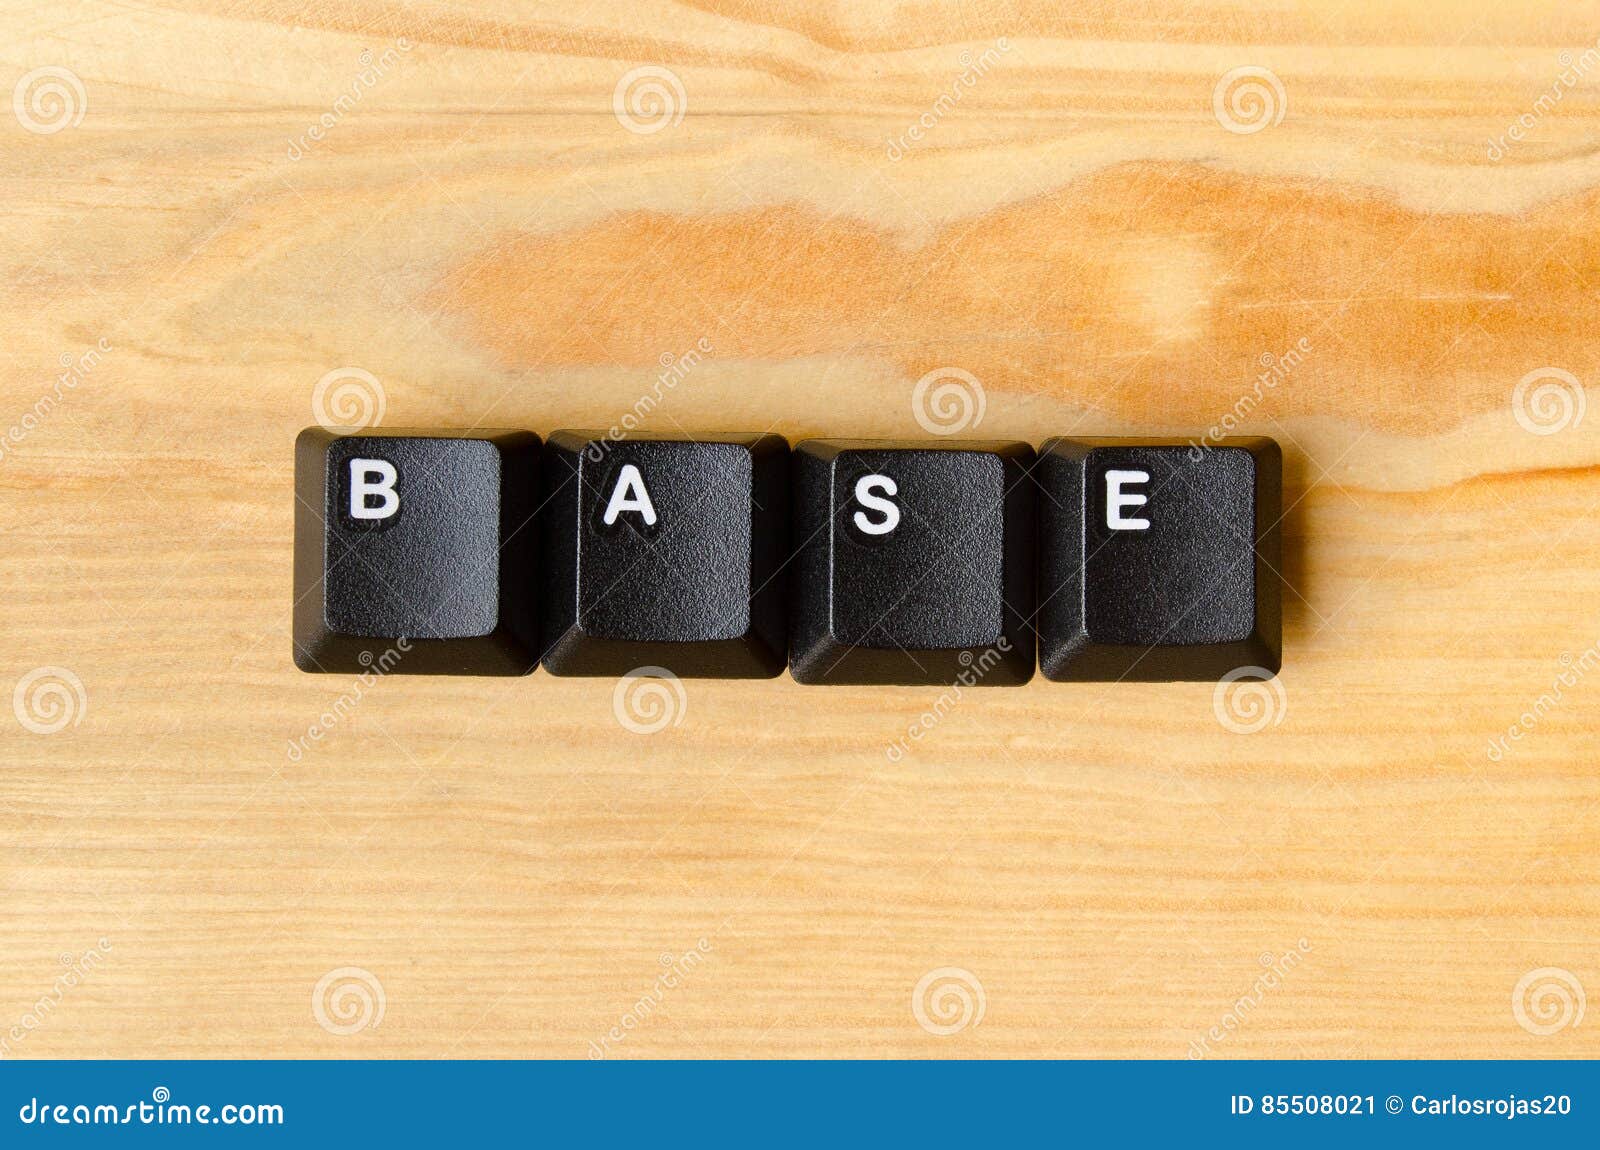 base word